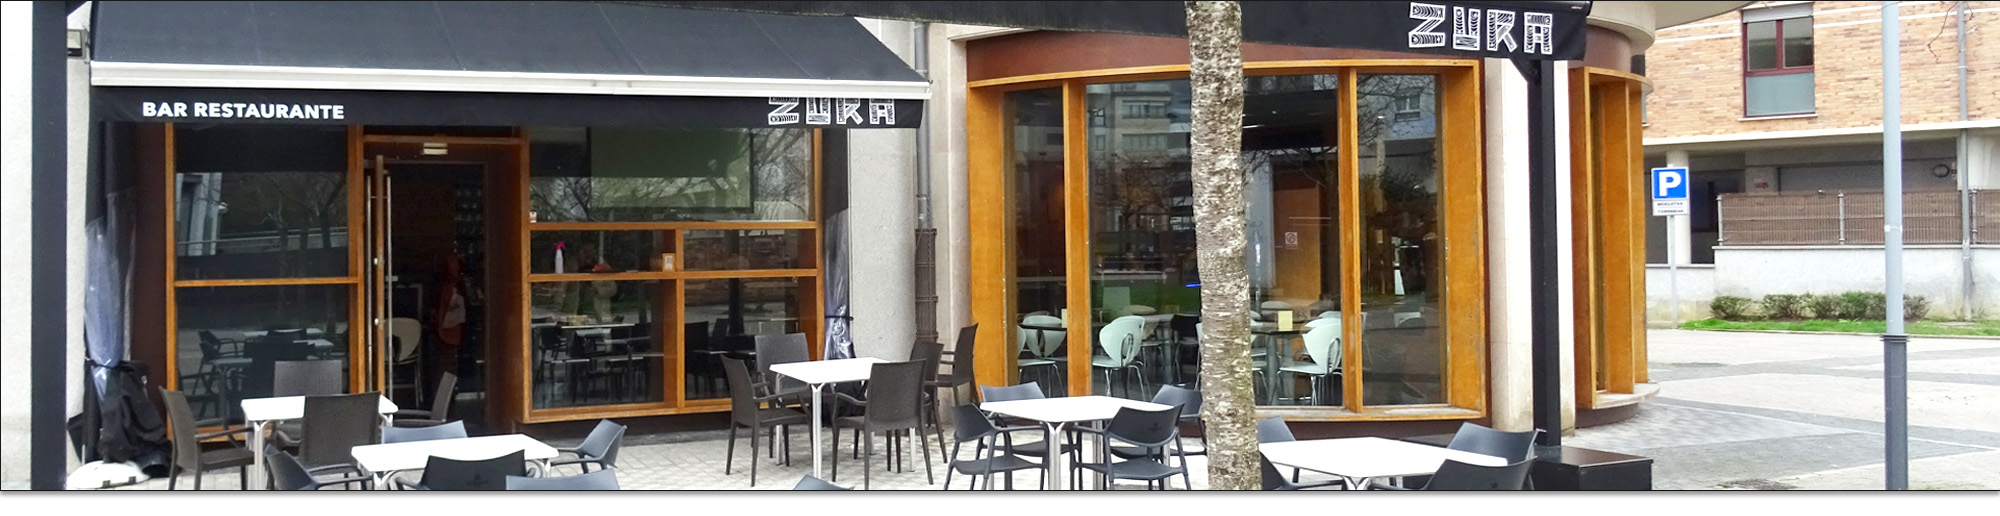 Bar Restaurante Zura en Irún